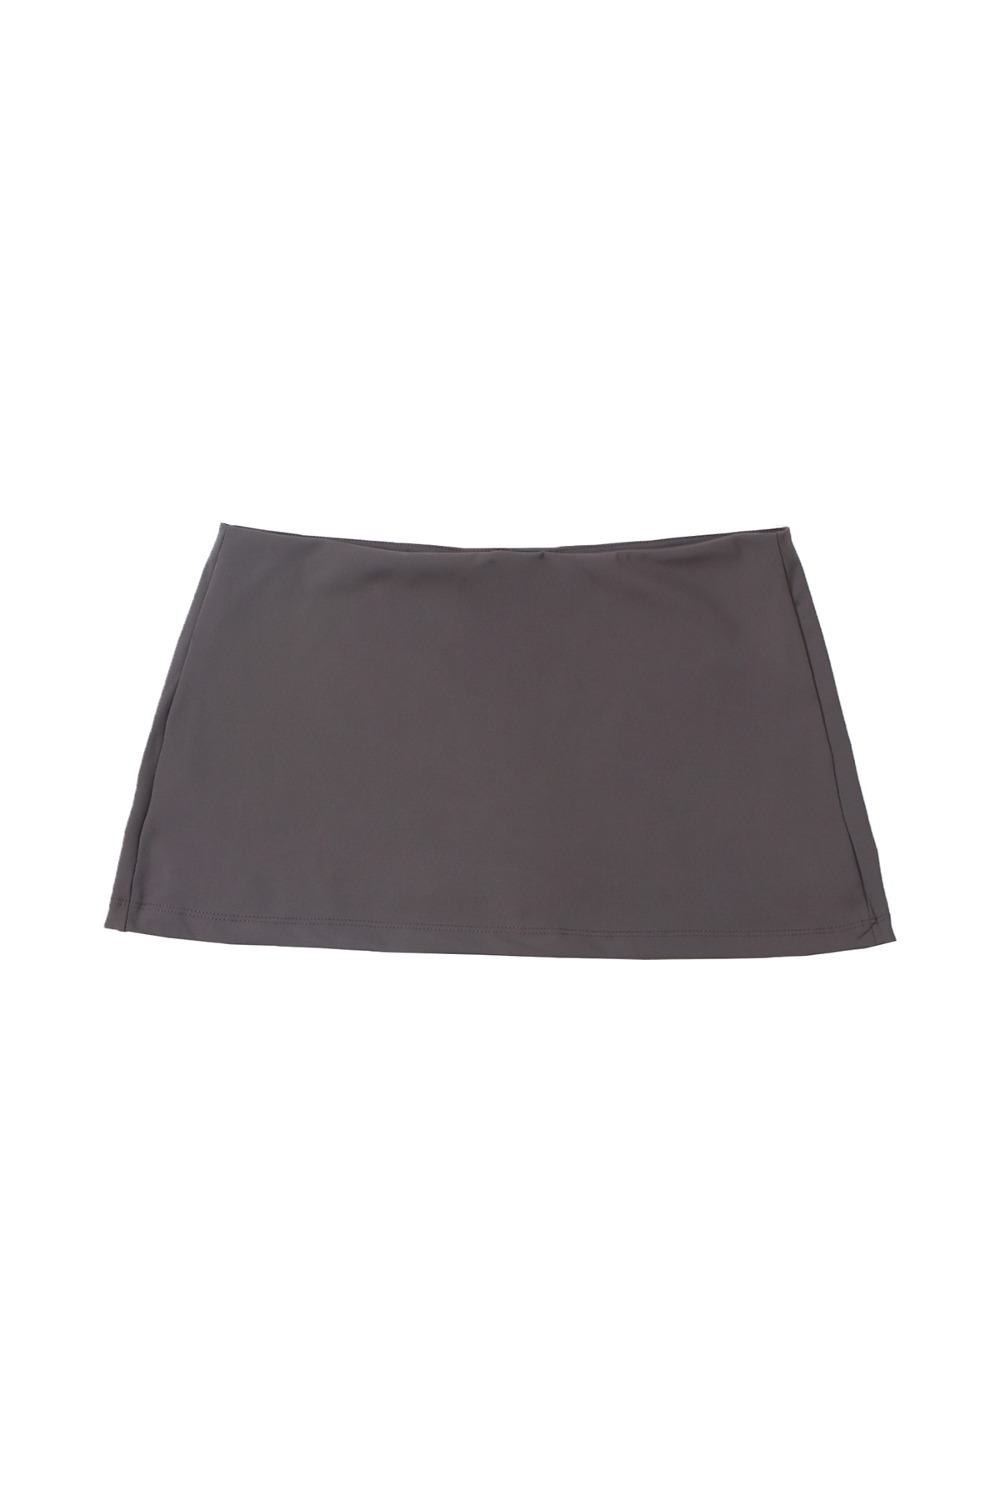 os Mini Skirt (Charcoal)